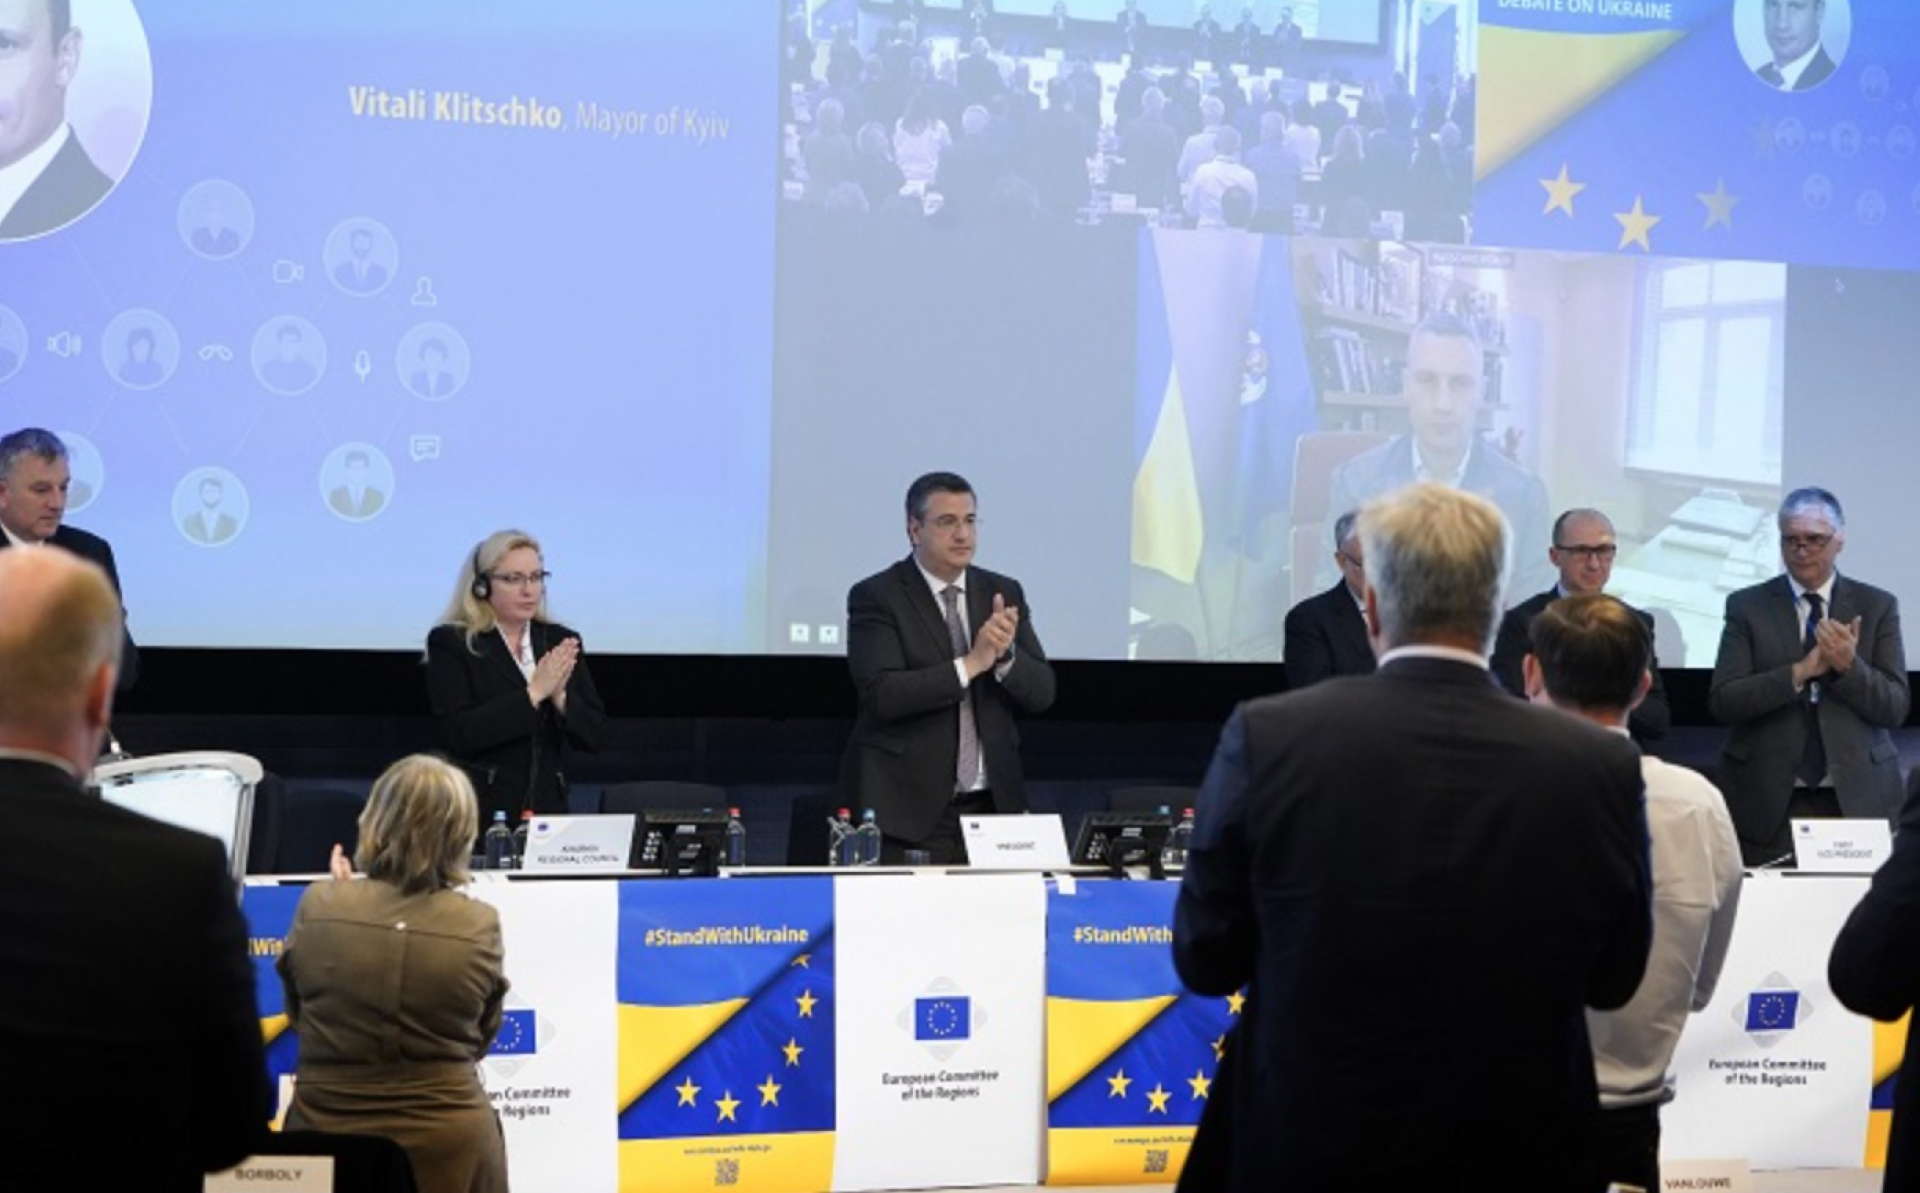 ‘We are ready now to help rebuild Ukraine’: European regions to offer expertise to Ukraine’s authorities